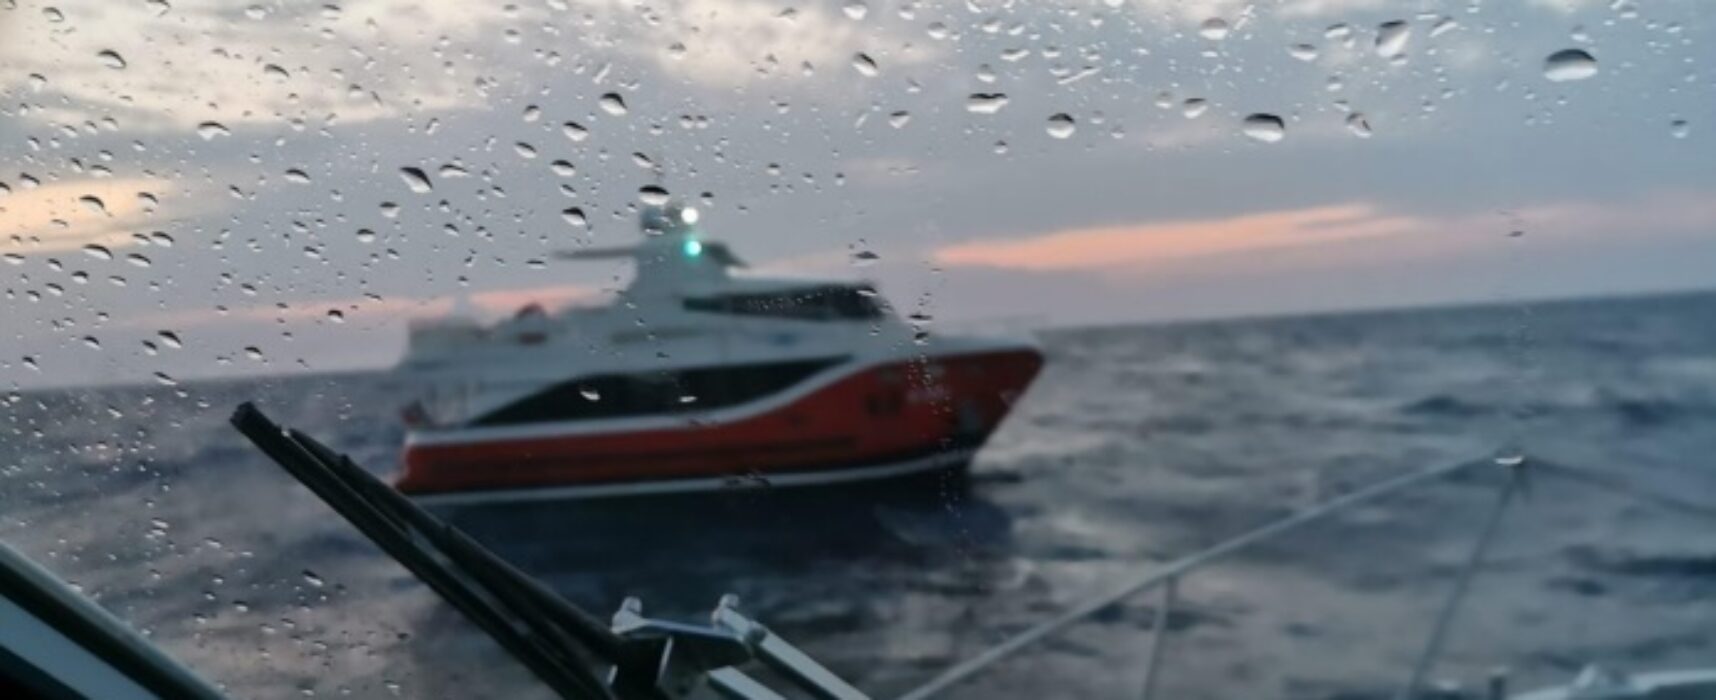 Operazione di soccorso per imbarcazione in difficoltà al largo di Bisceglie, in salvo 81enne